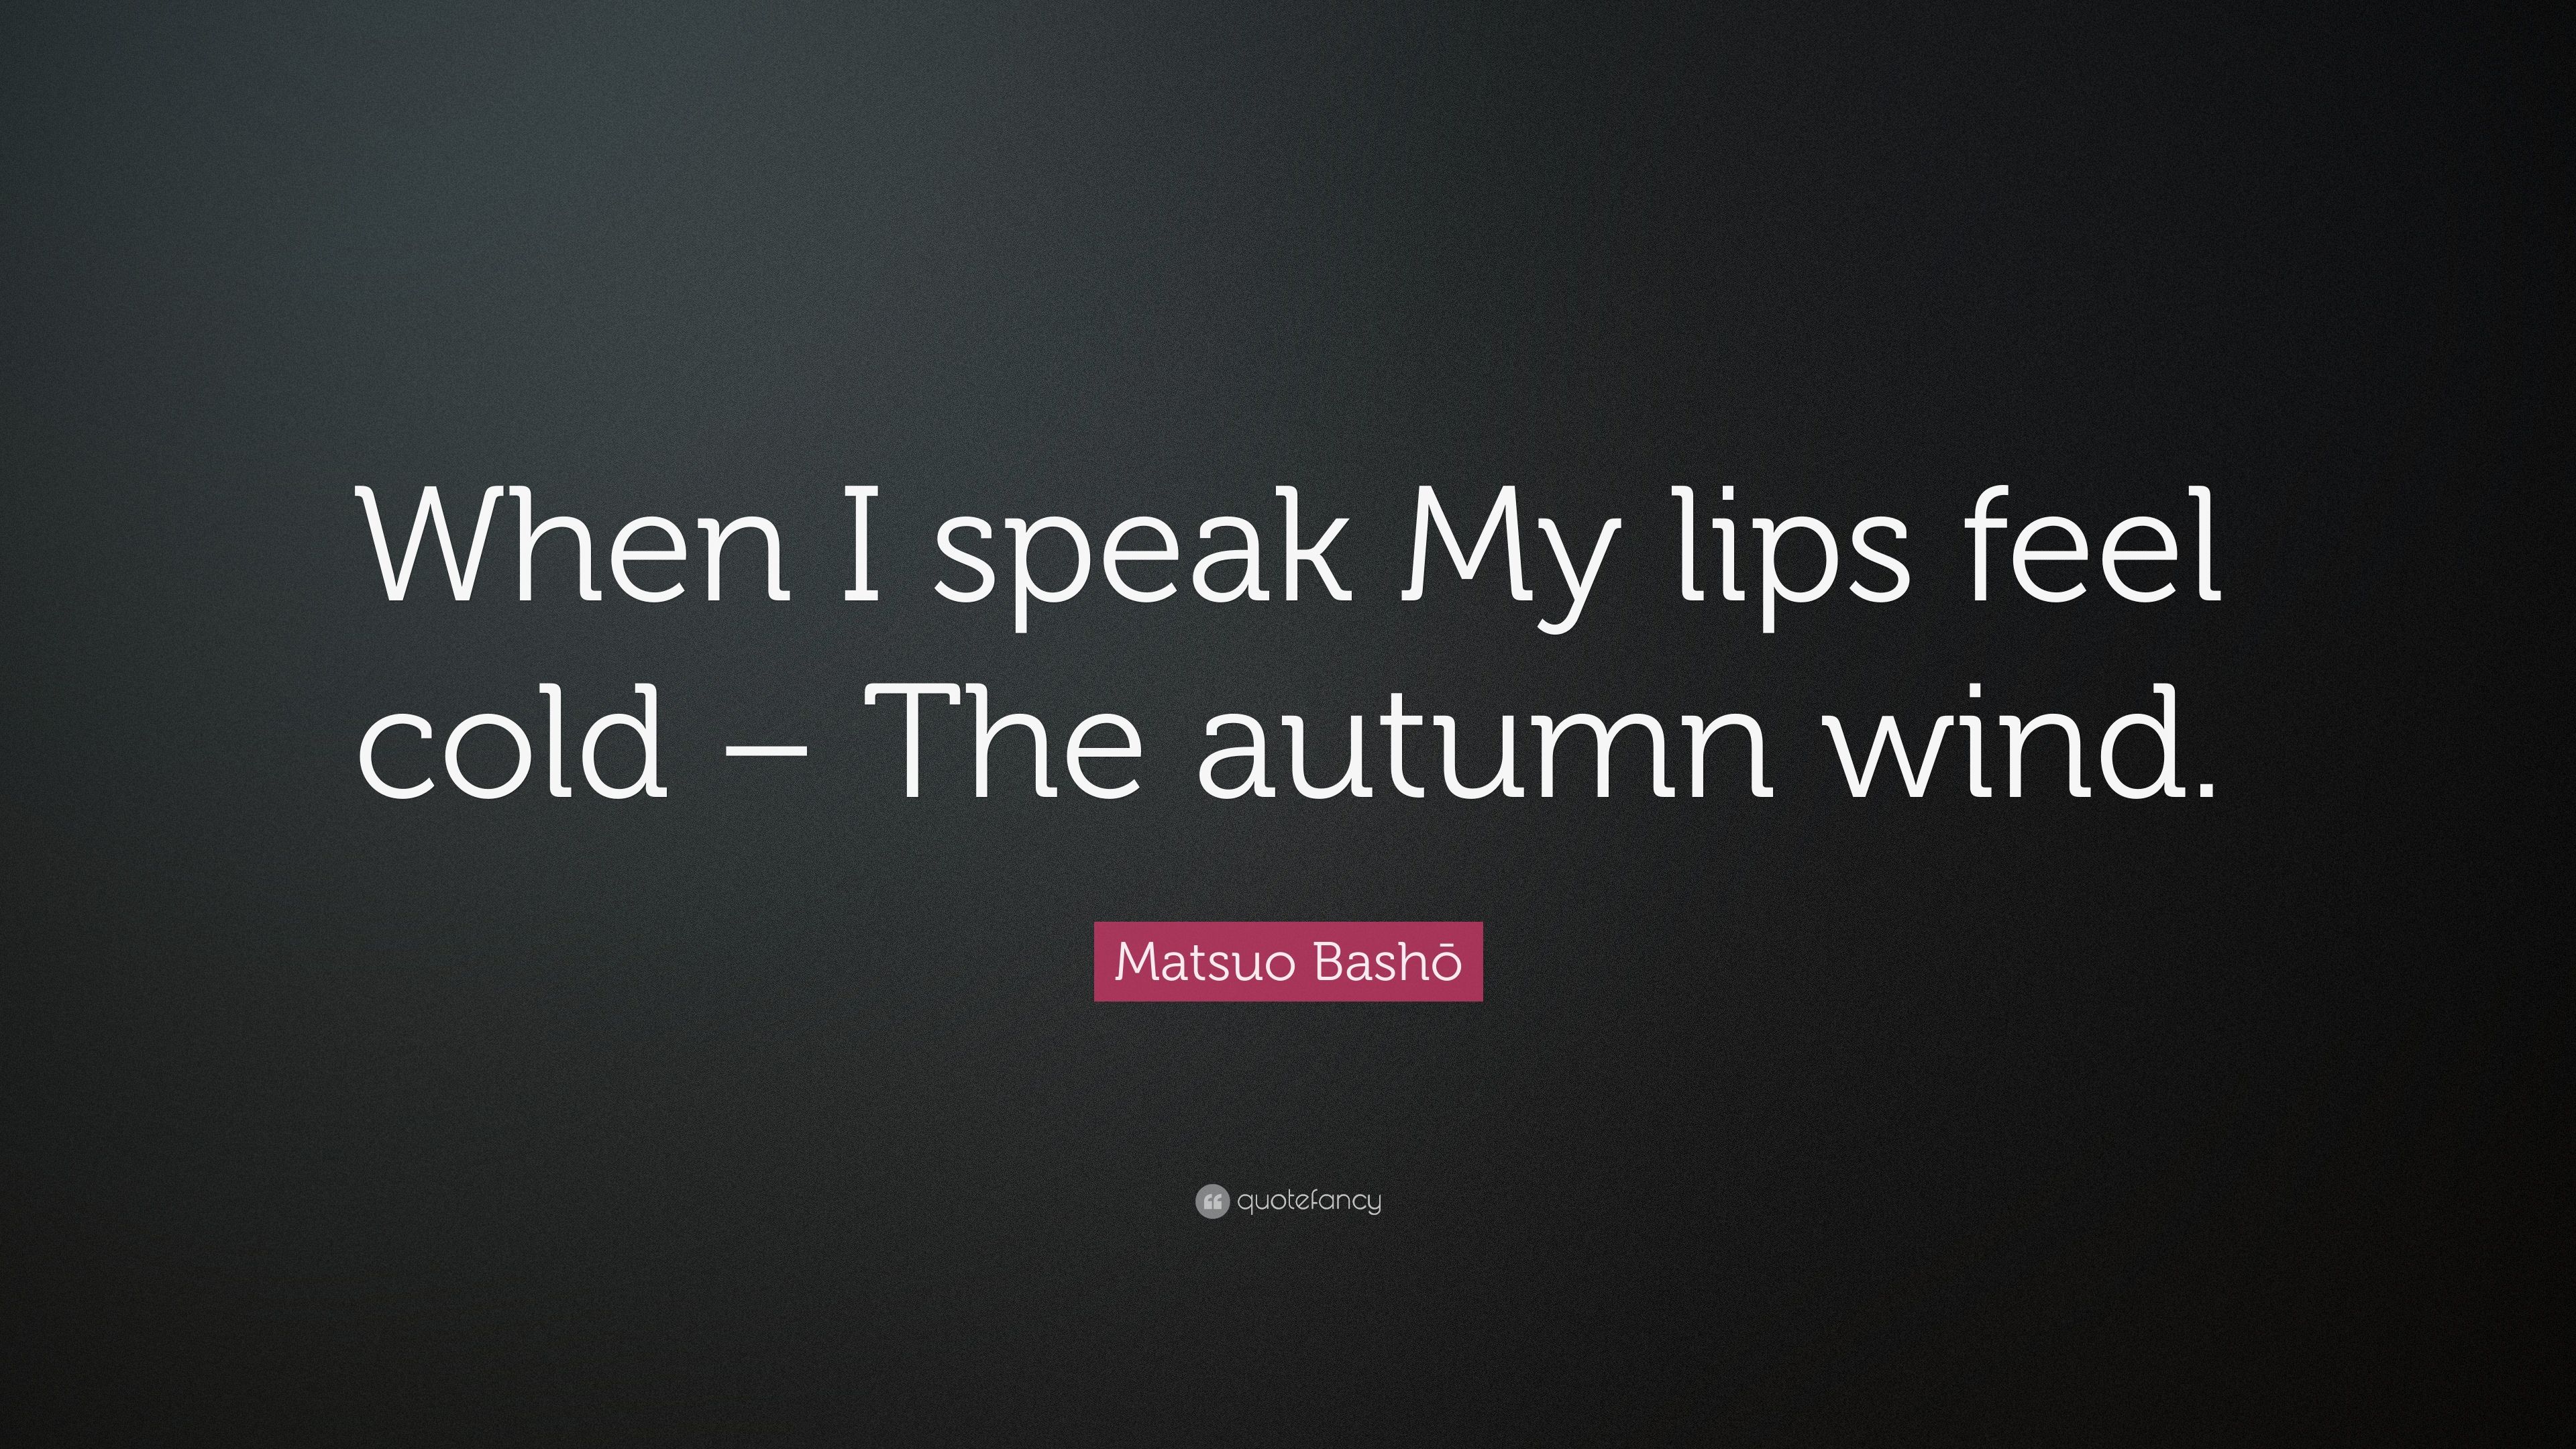 Matsuo Bashō Quote: “When I speak My lips feel cold